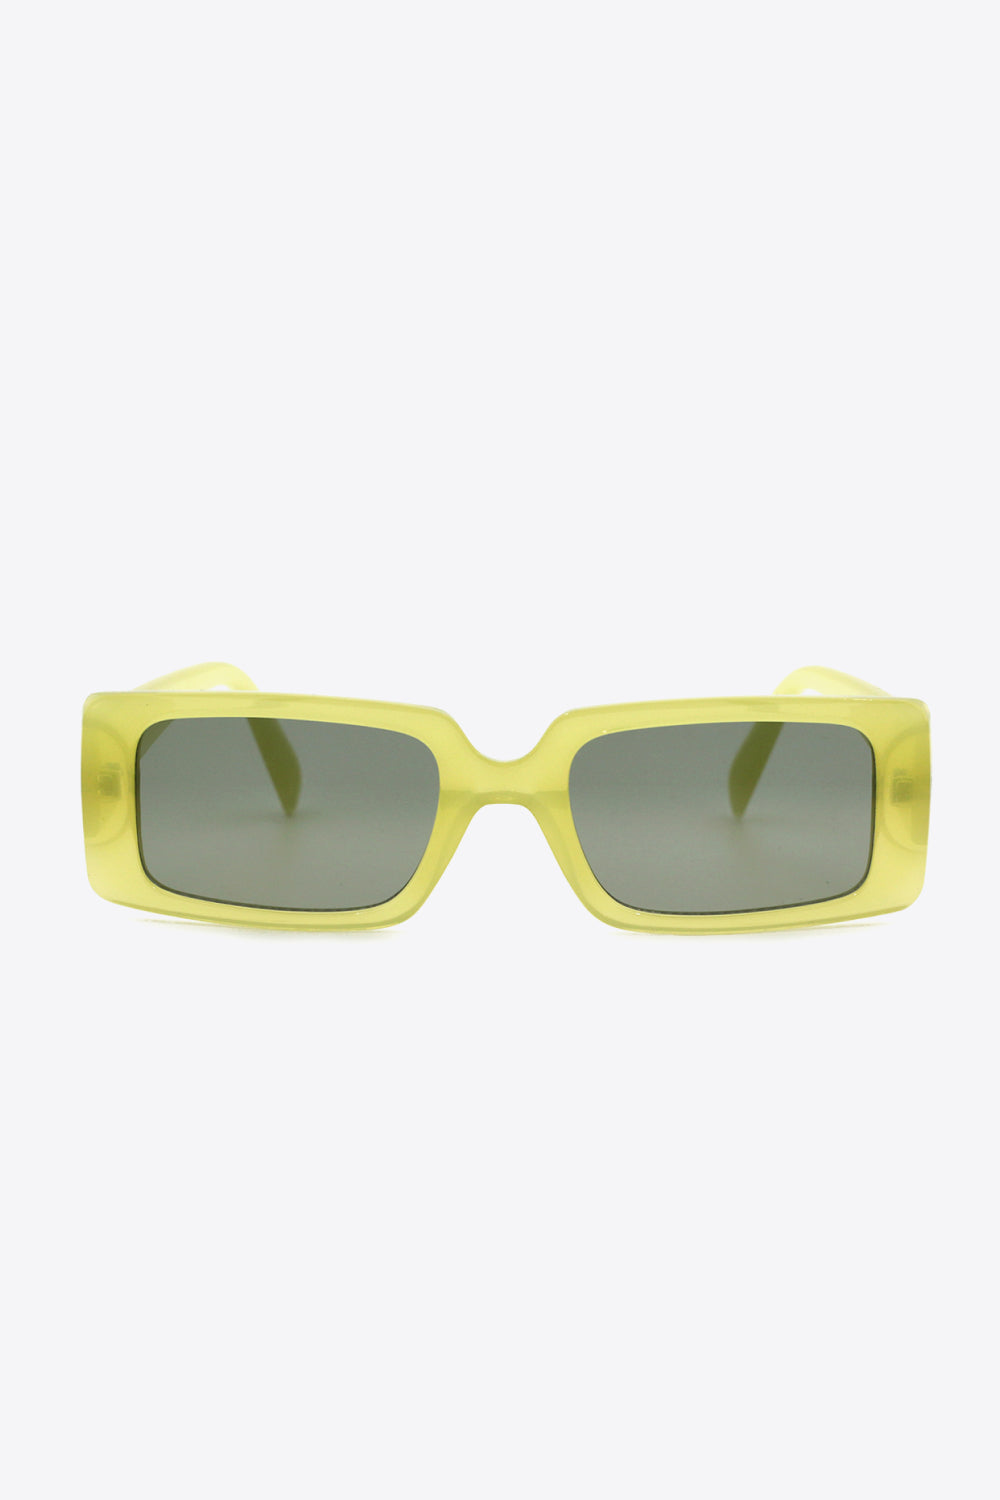 UV400 Polycarbonate Rectangle Sunglasses - Sunglasses - FITGGINS